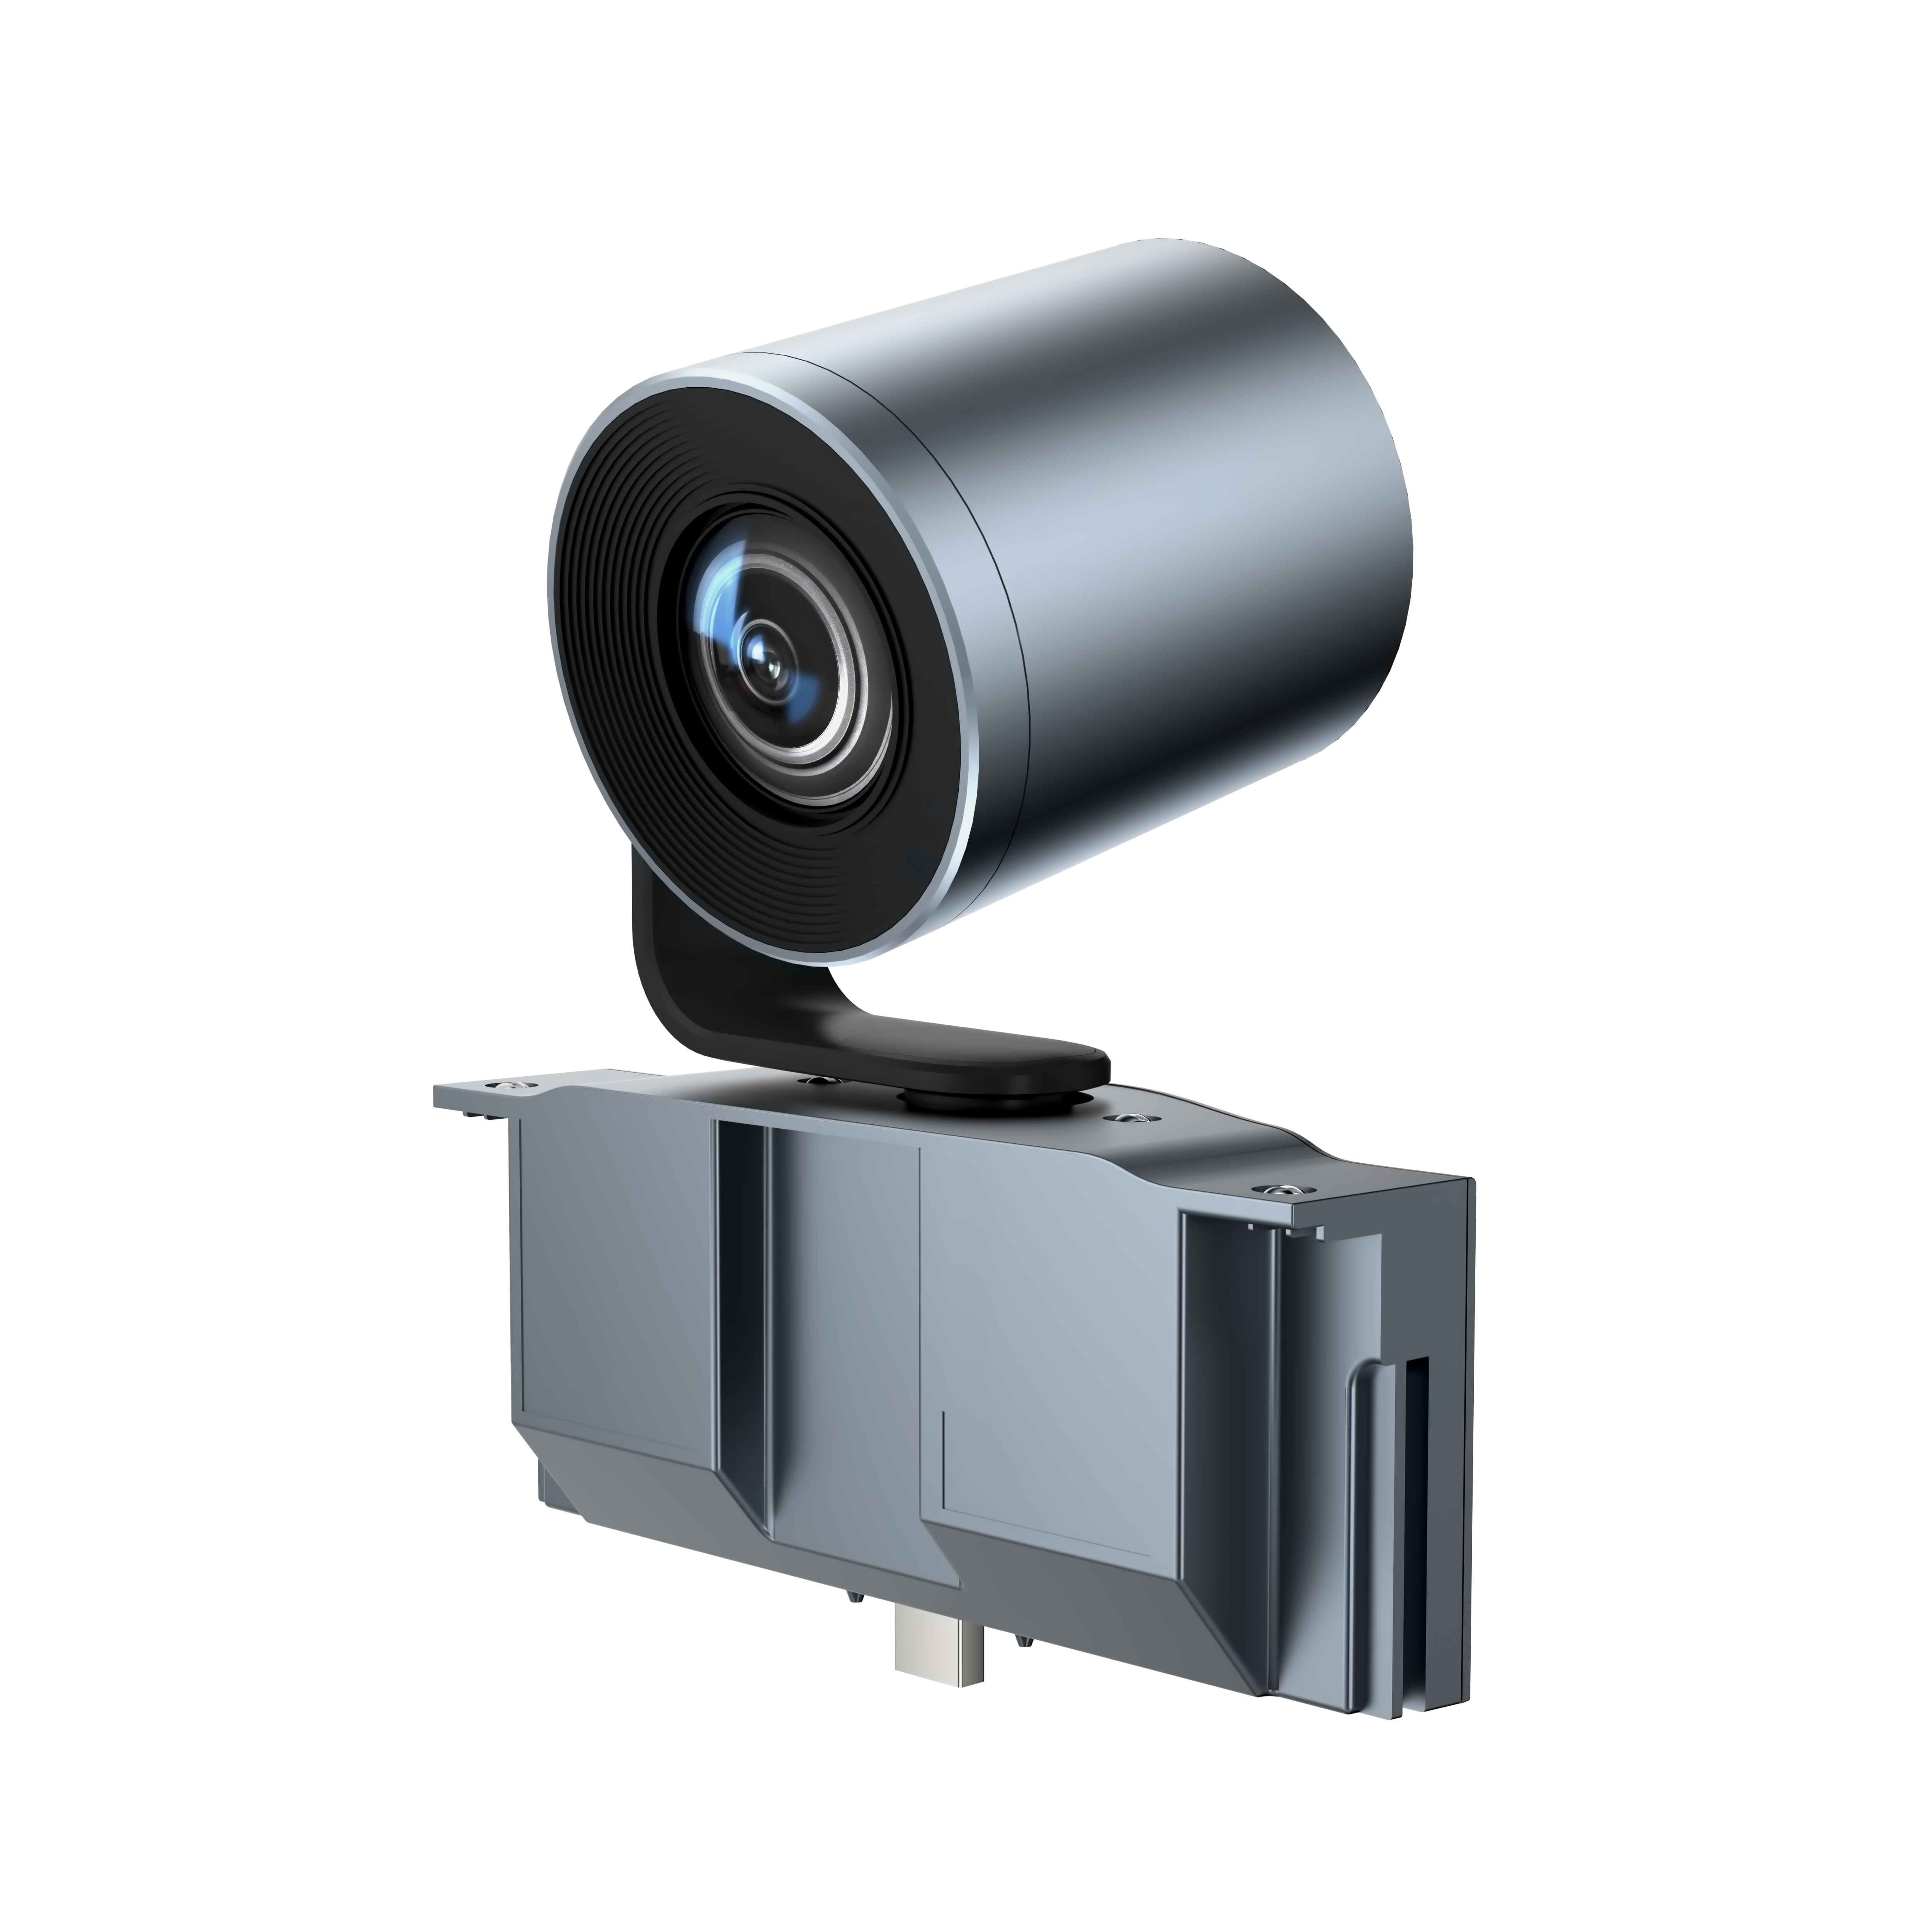 MeetingBoard 6X Optical PTZ Camera